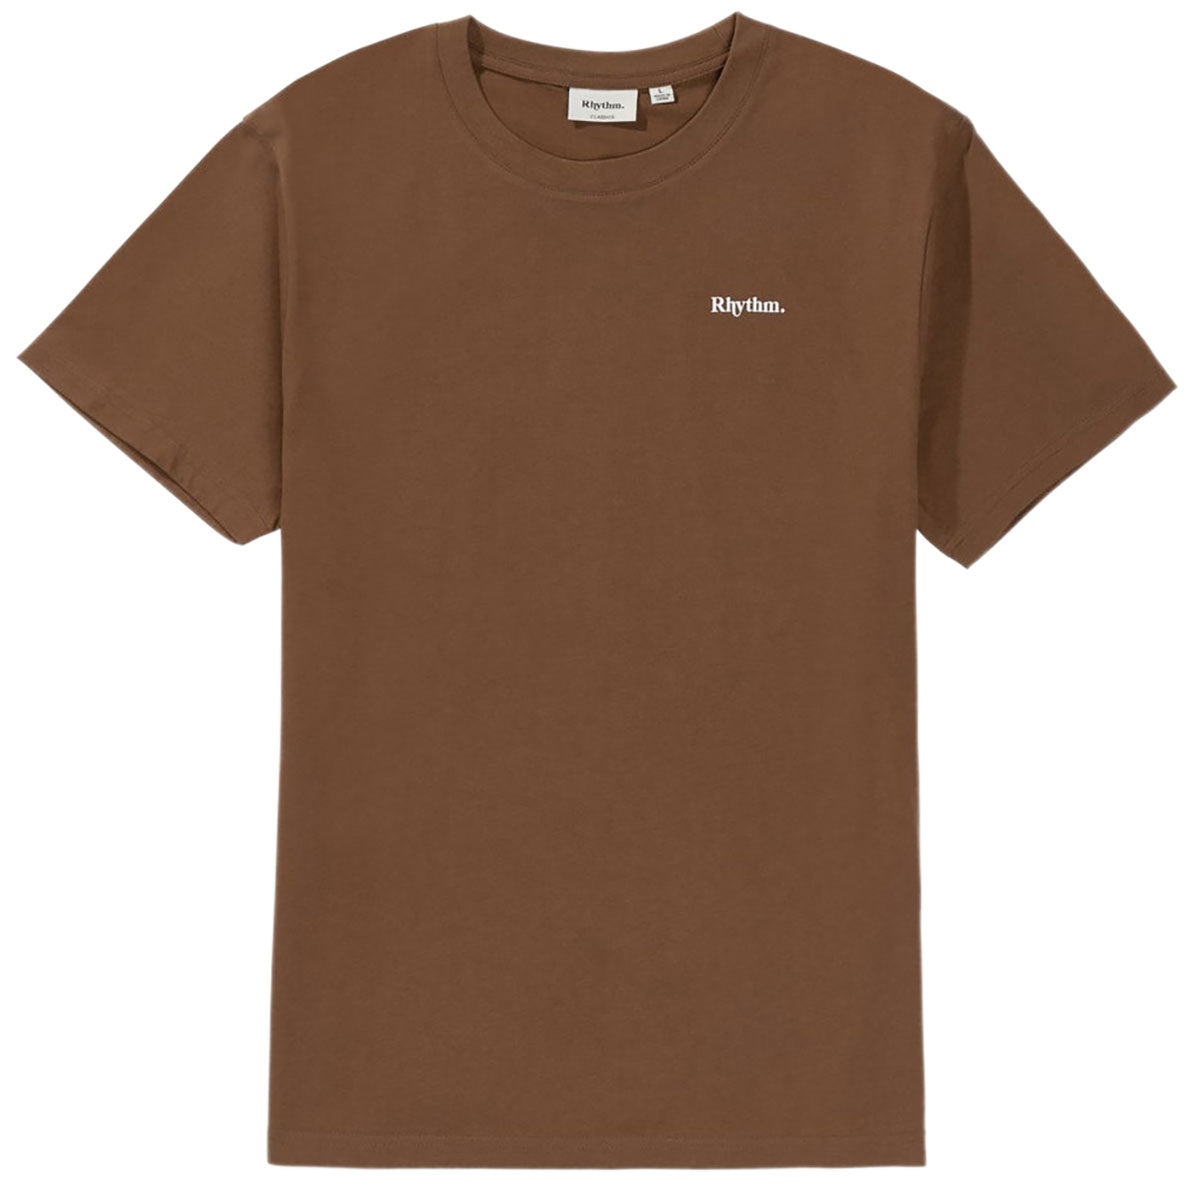 Rhythm Classic Brand T-Shirt - Chocolate image 1